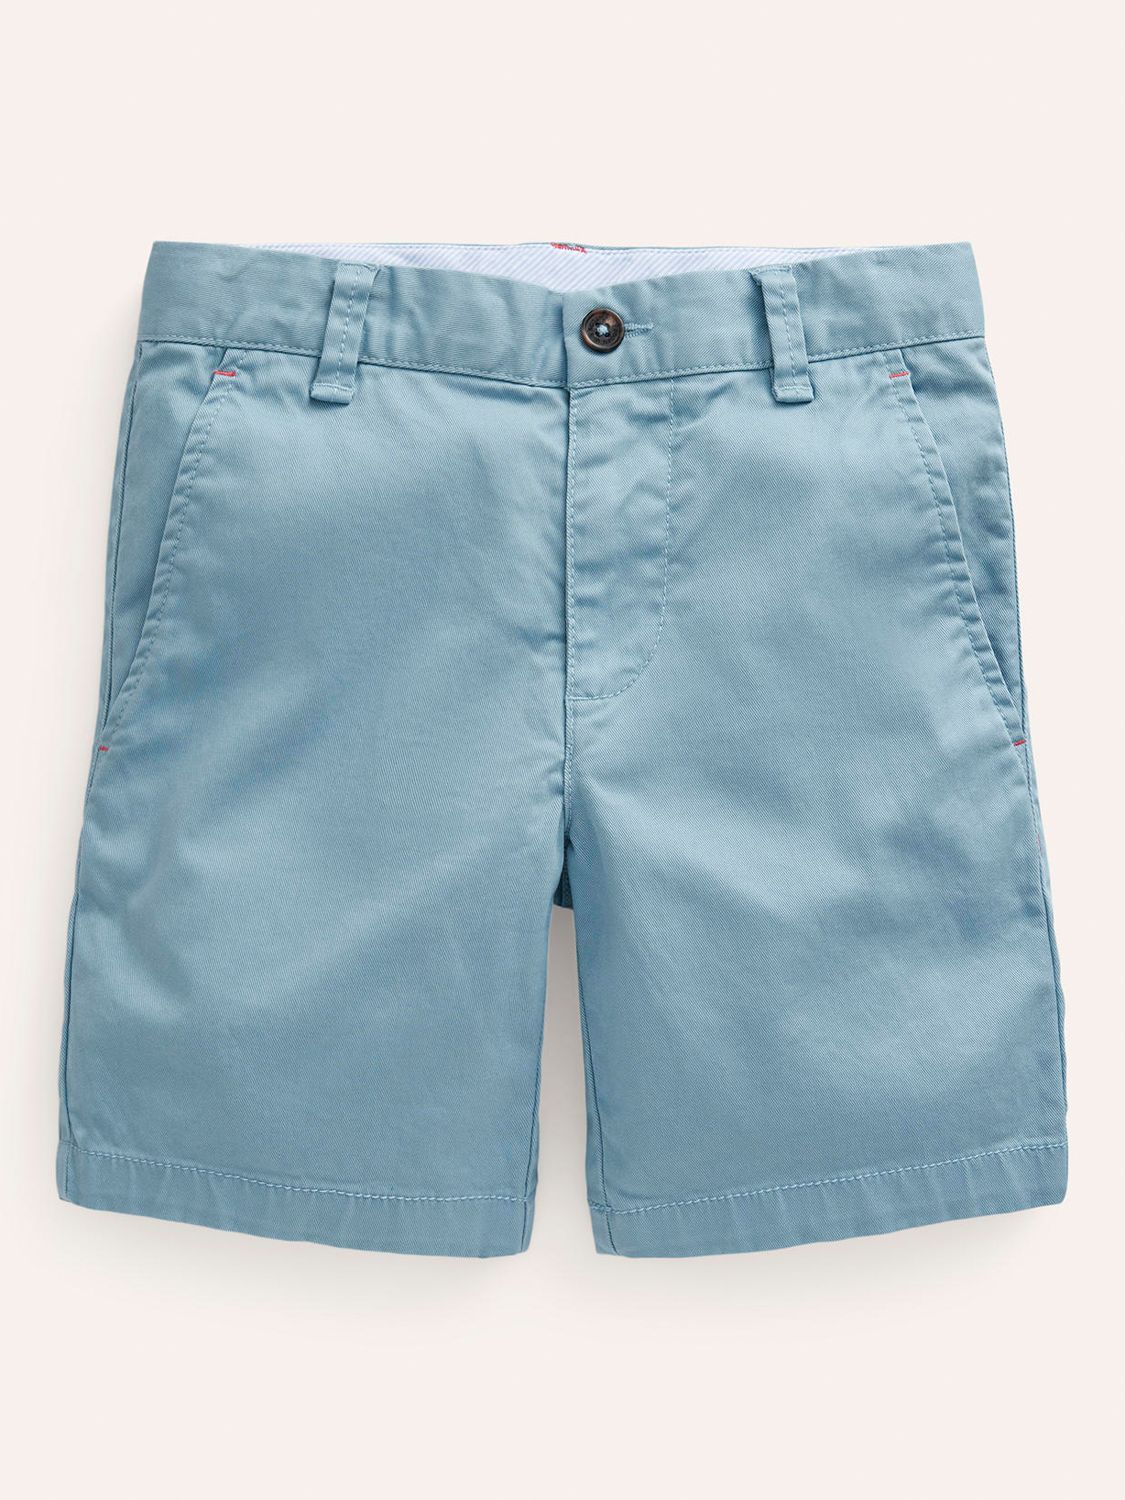 Mini Boden Kids' Classic Chino Shorts, Duck Egg Blue, 3 years